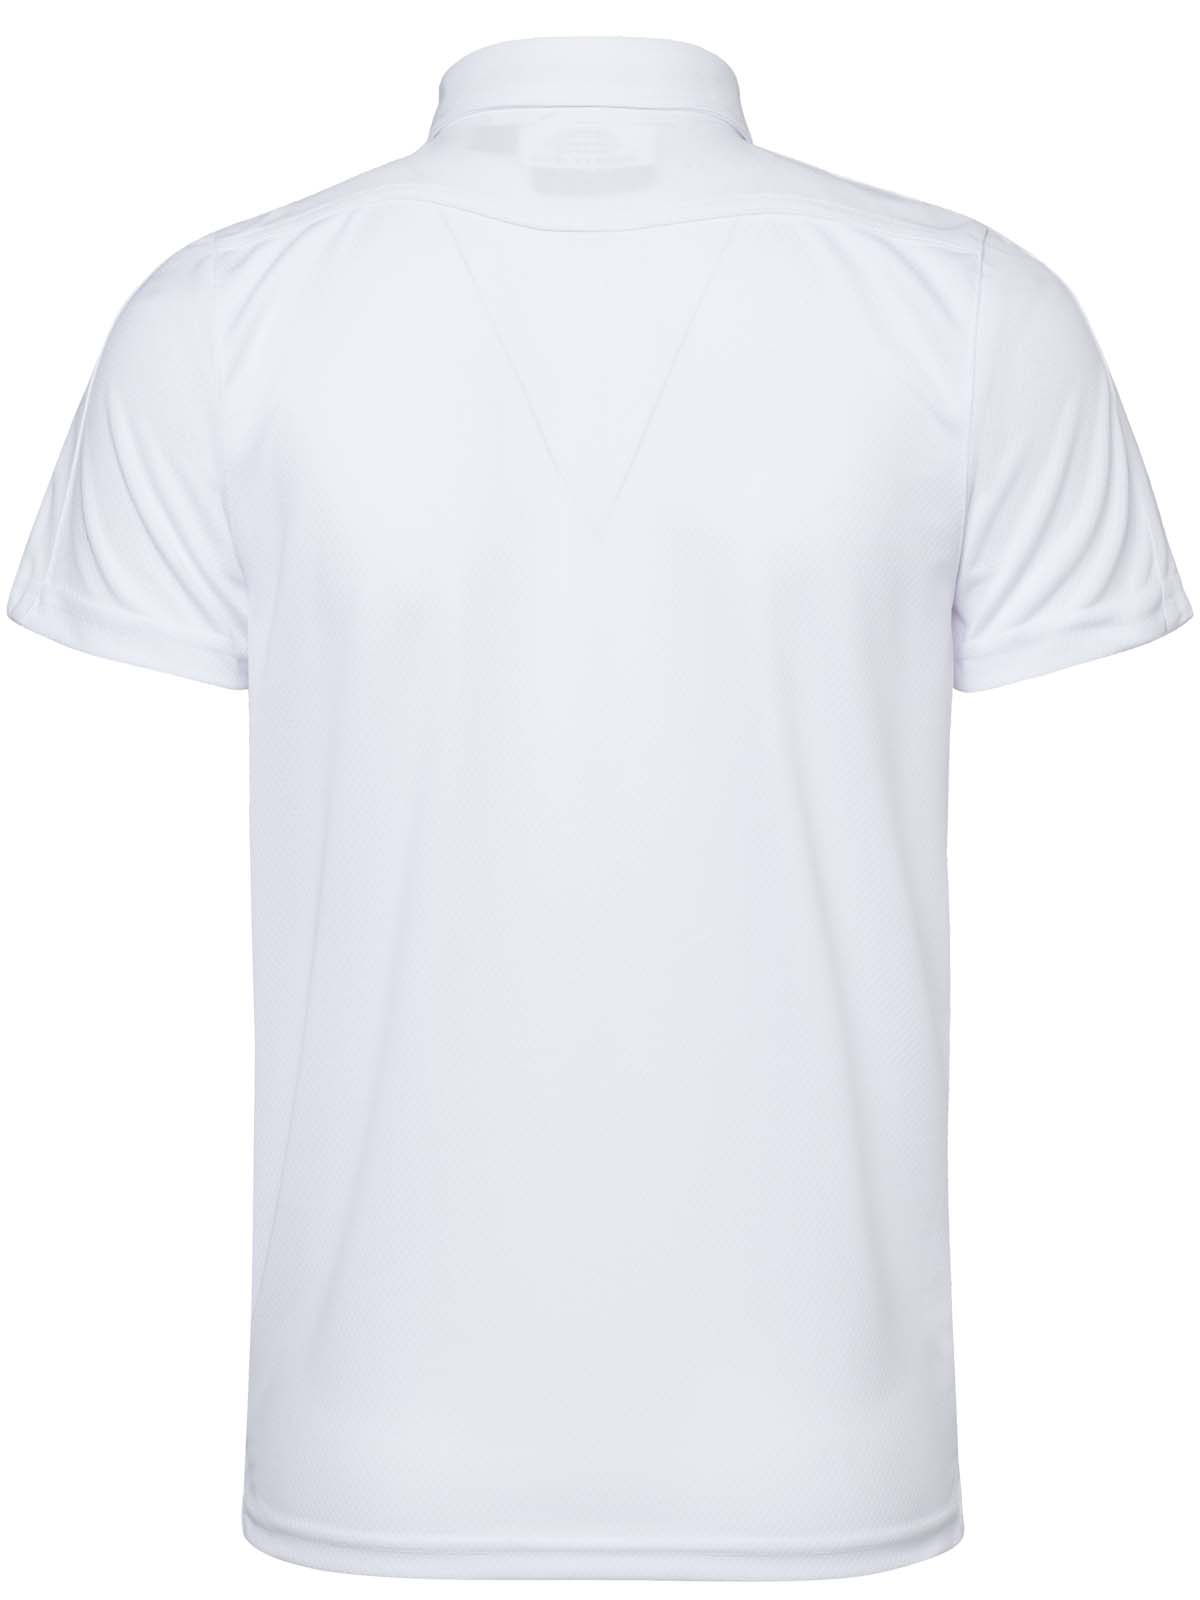 Golf Polo Shirt white